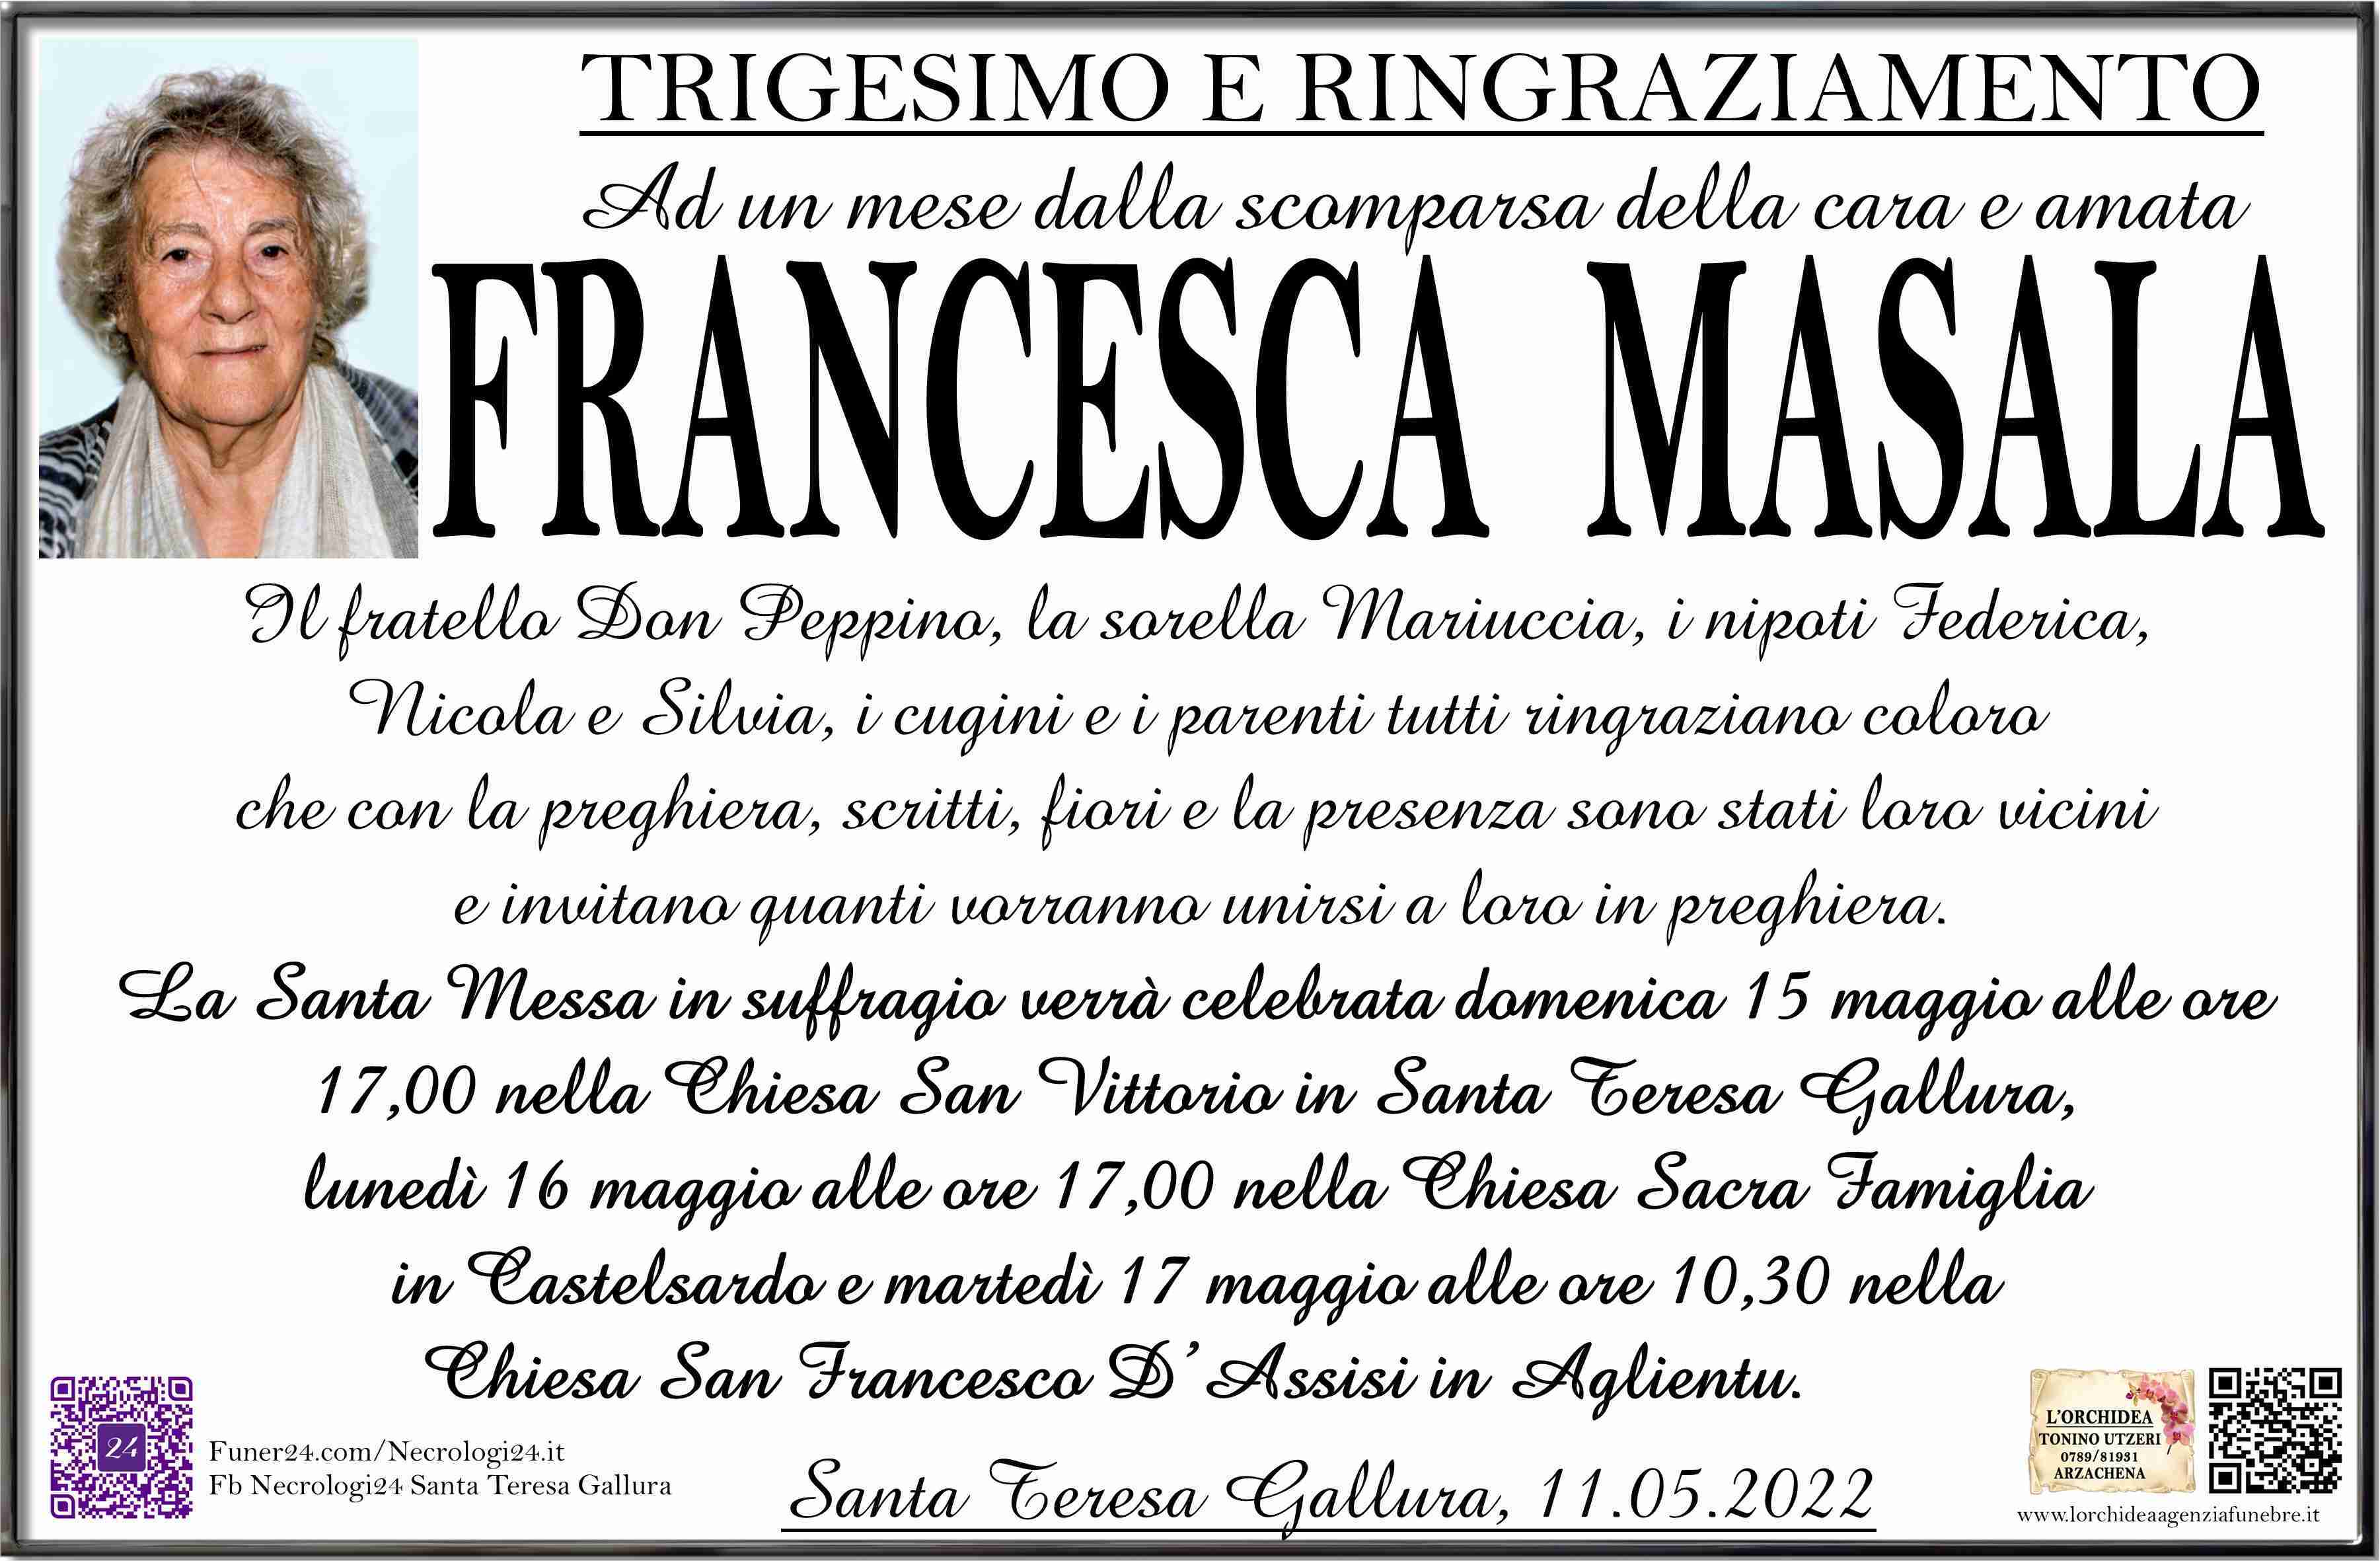 Francesca Masala